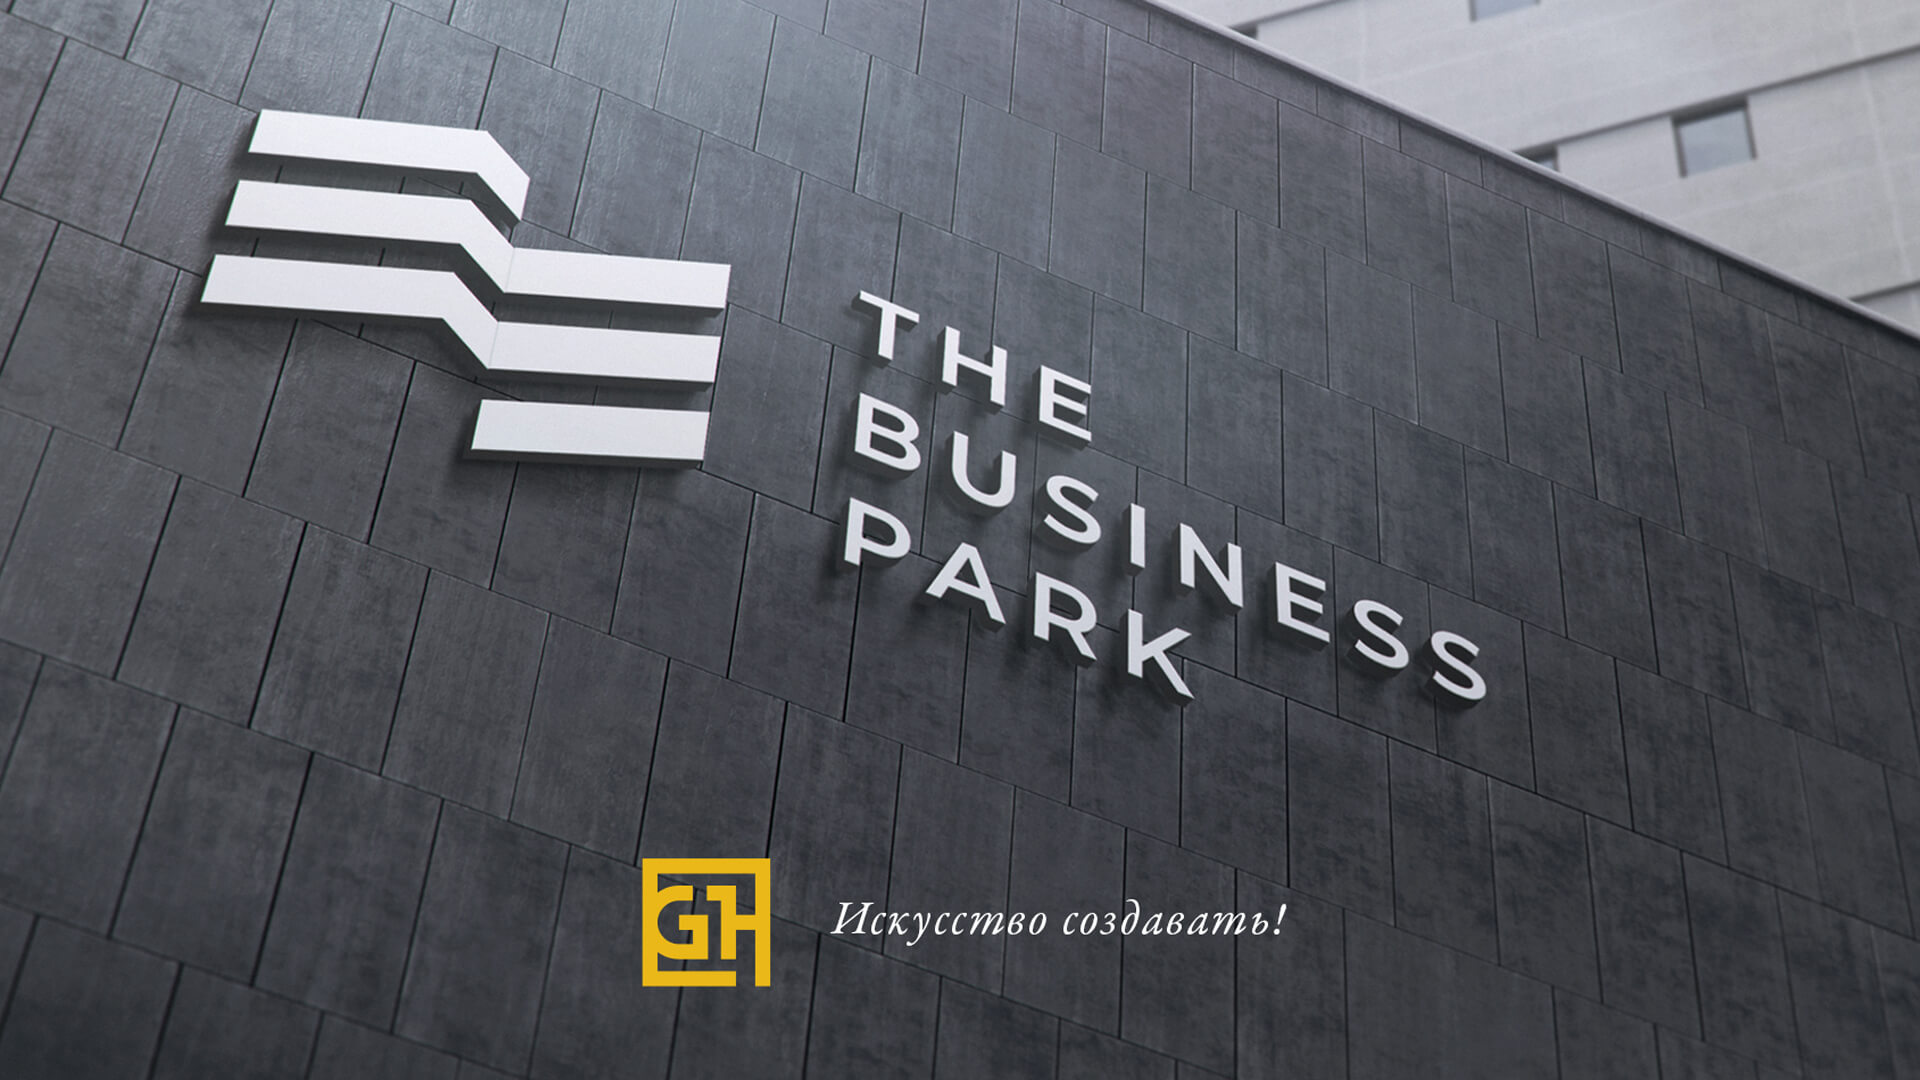 Центр бизнеса и досуга The Business Park: продажи стартовали